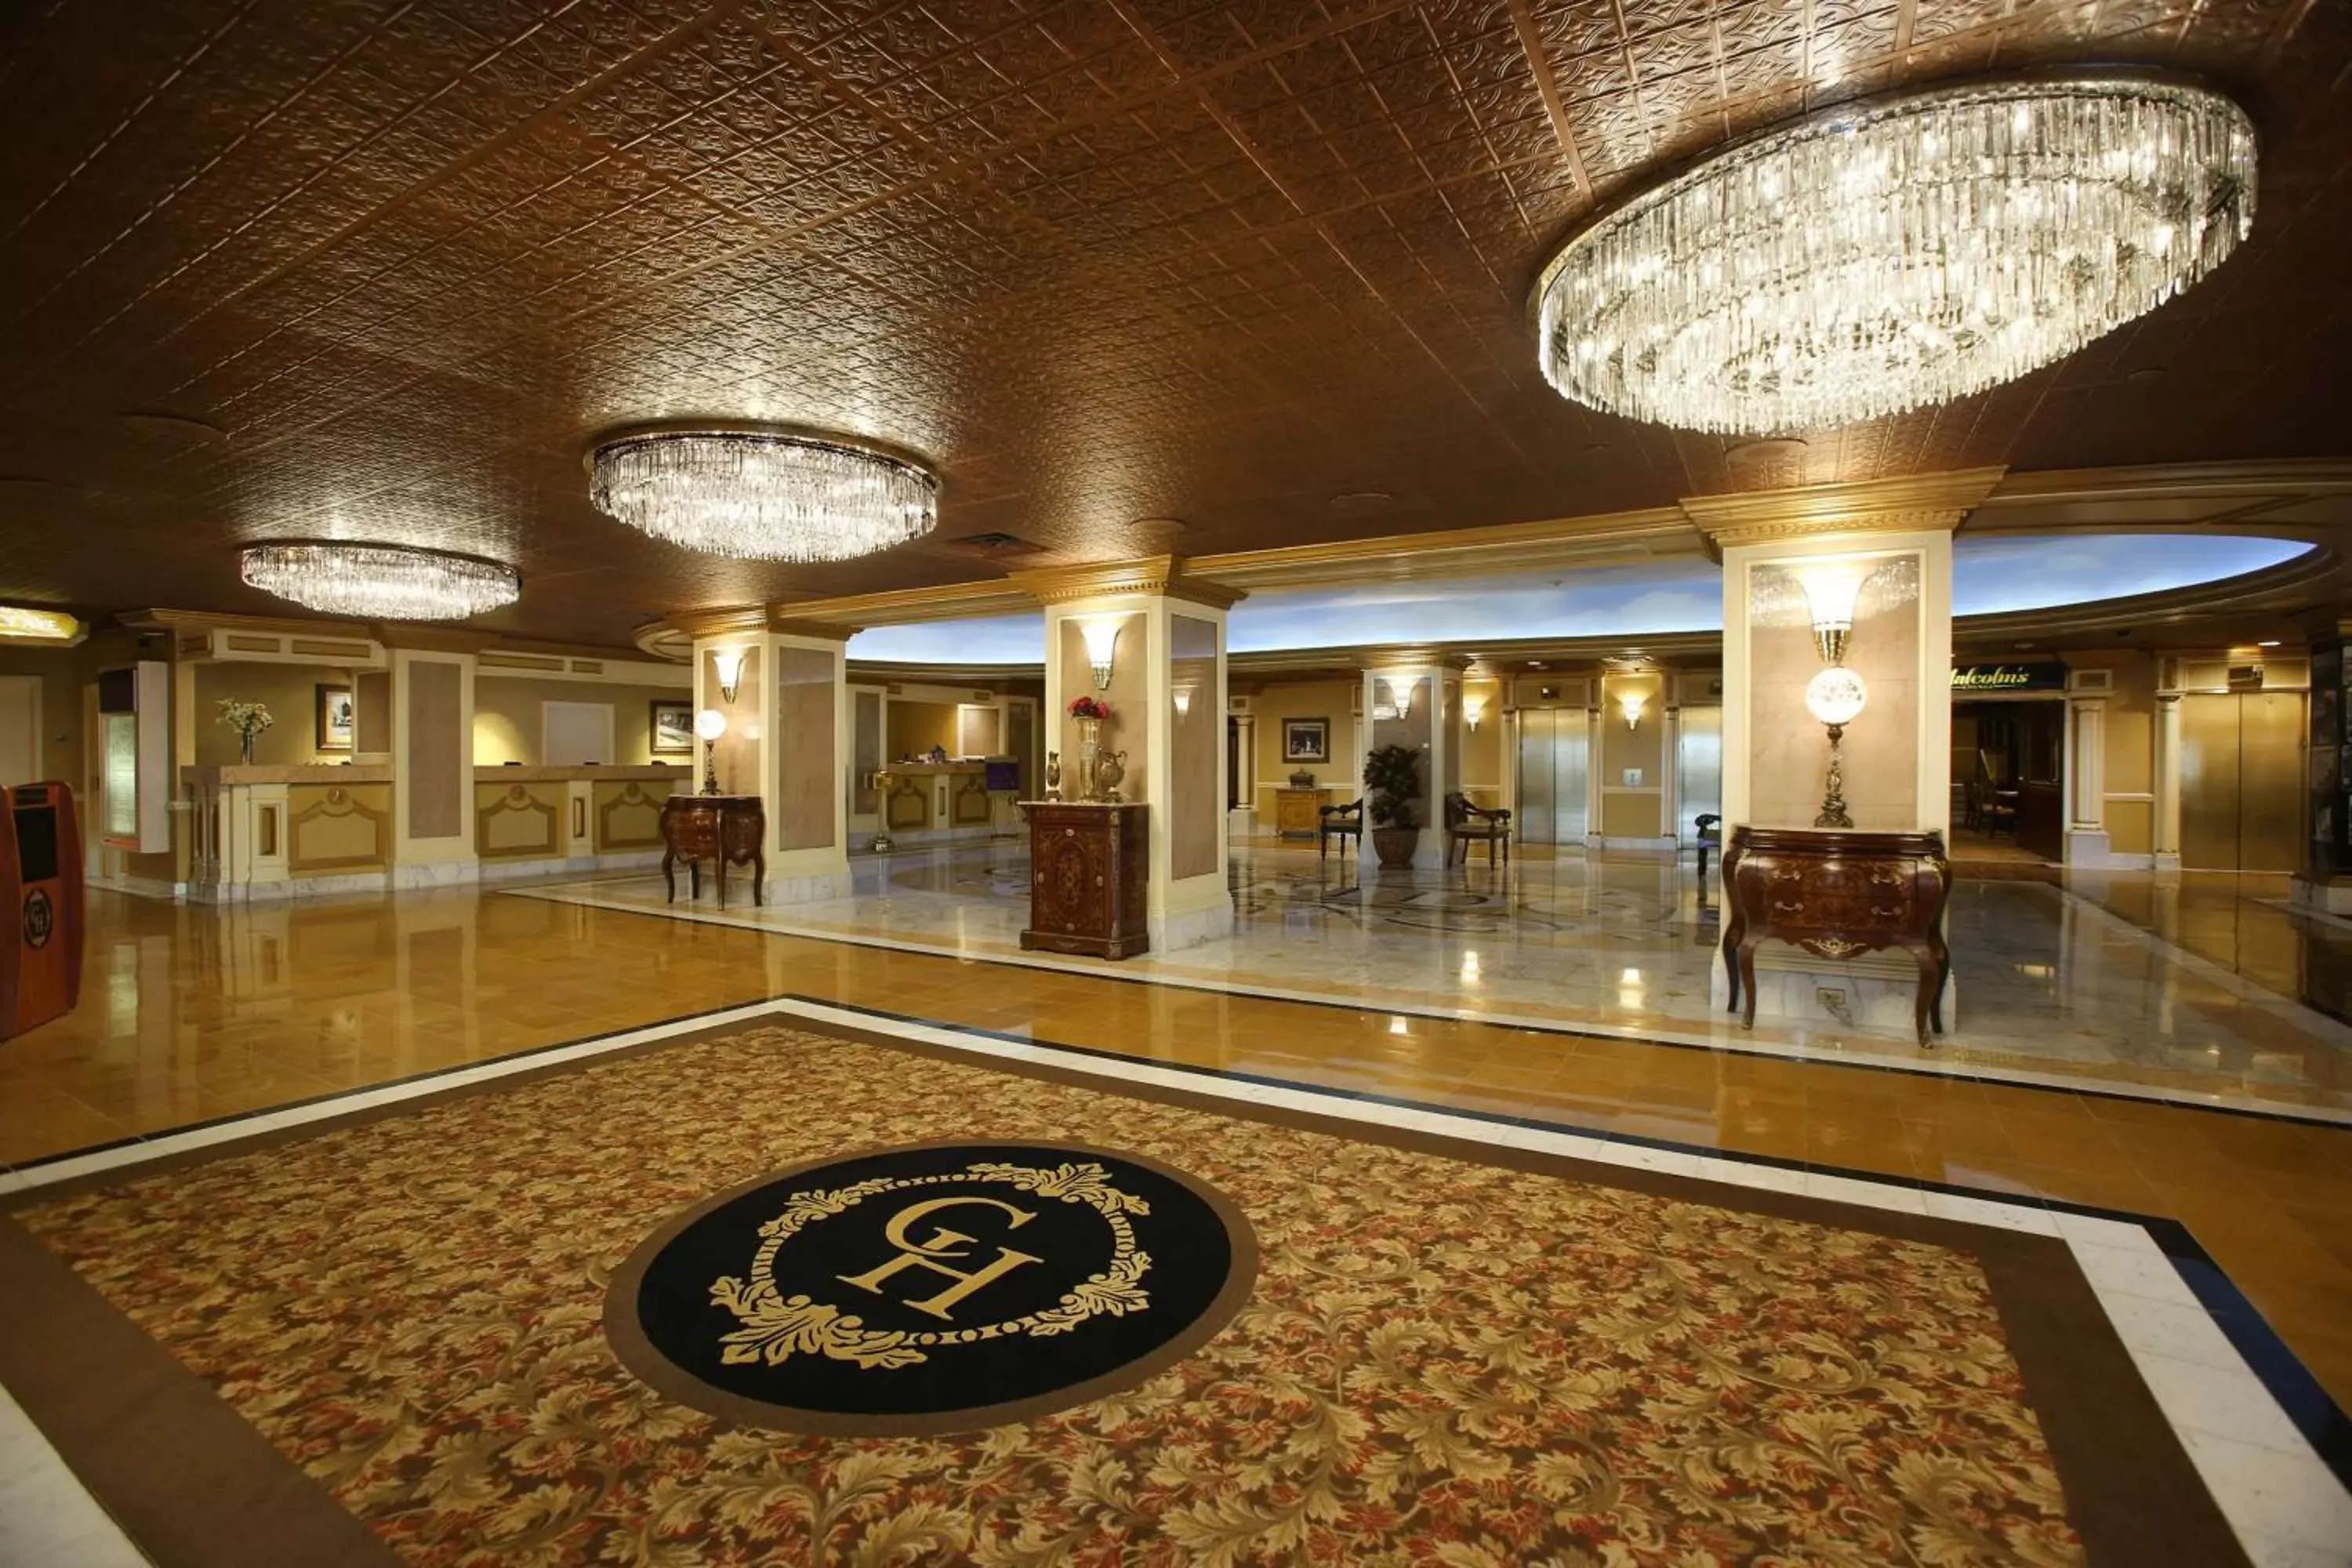 Lobby or reception in The Claridge Hotel